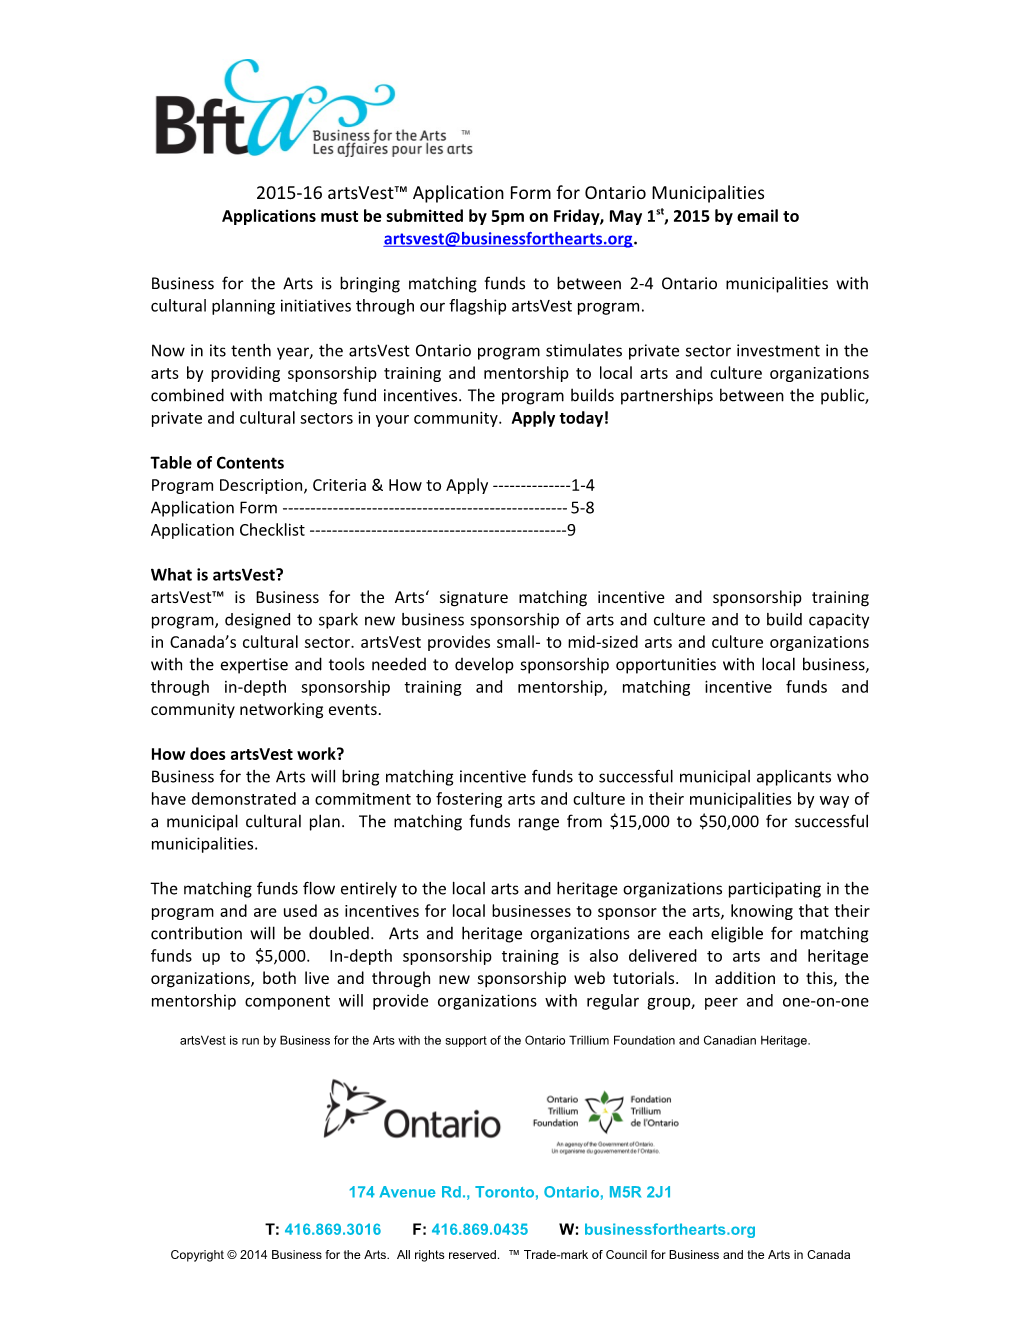 2011 Artsvest Application Form for Ontario Municipalities